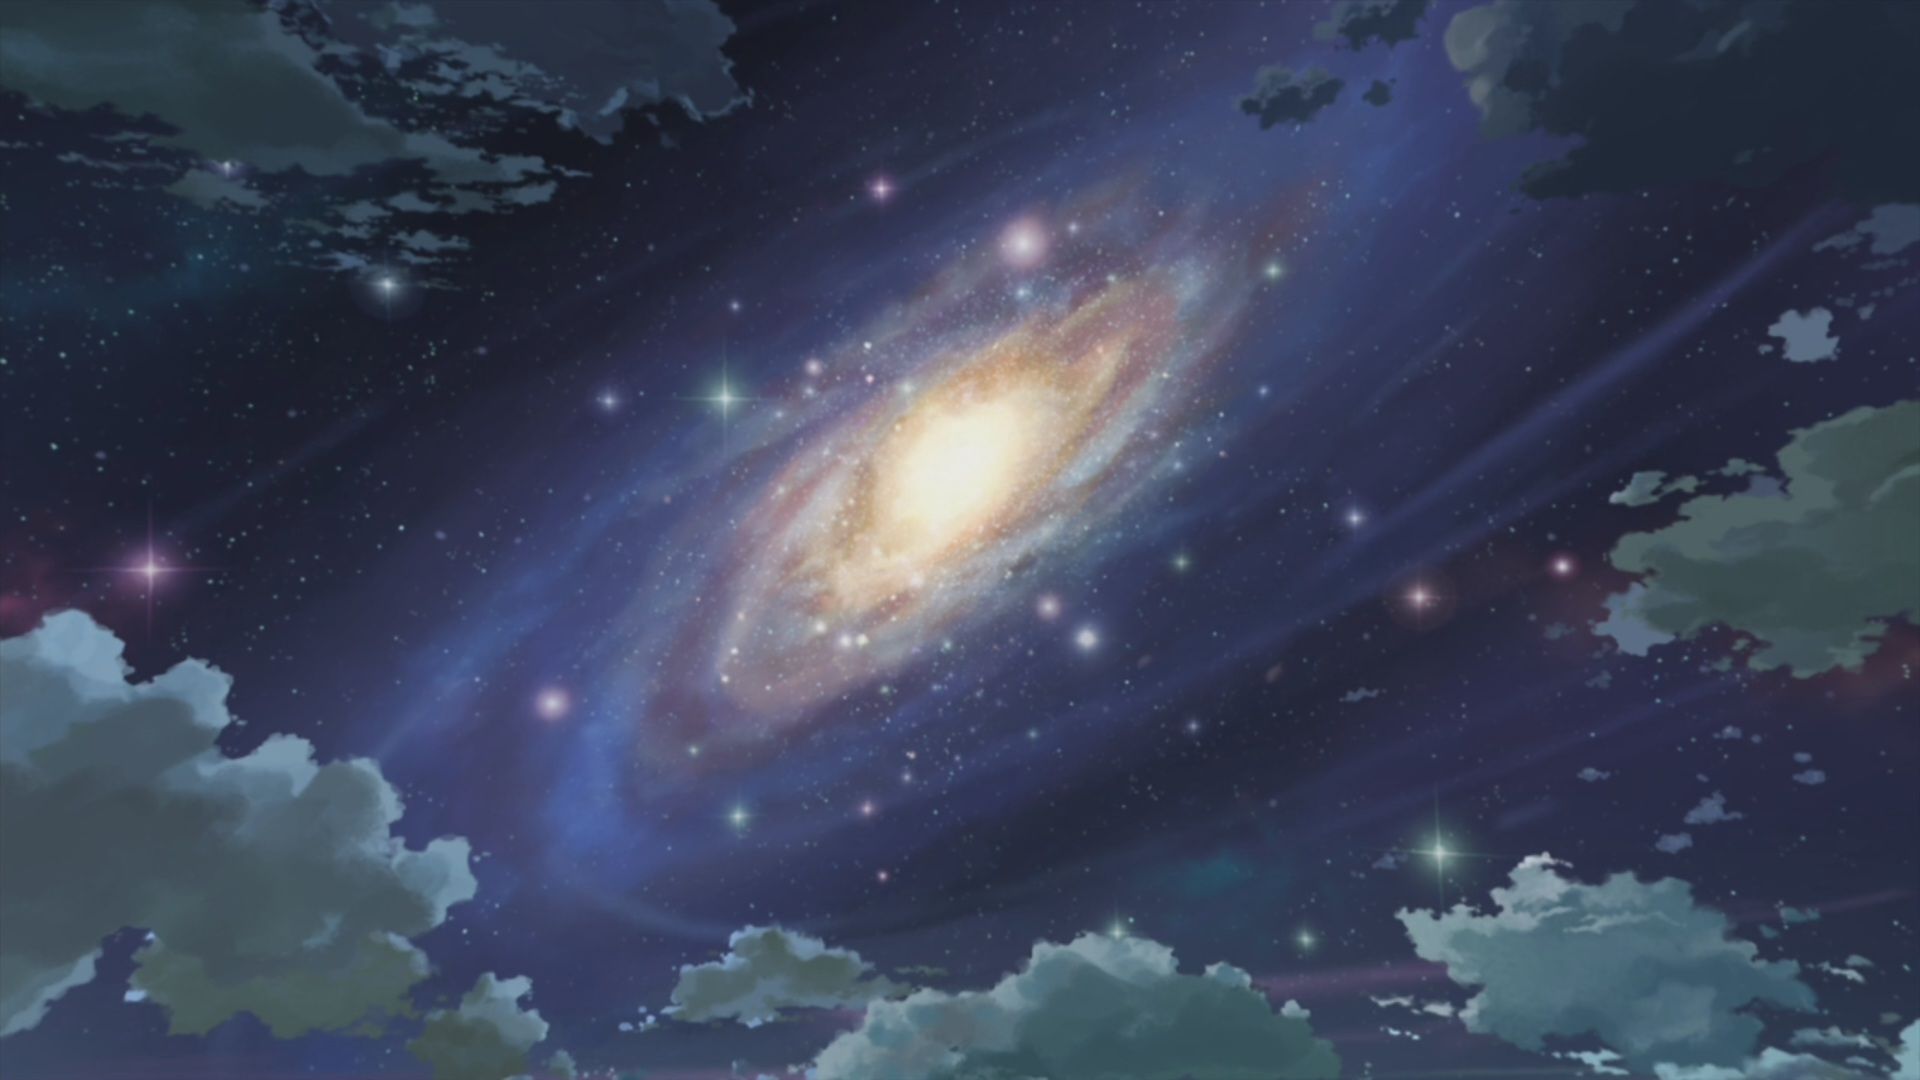 Anime Galaxy Wallpaper Free Anime Galaxy Background